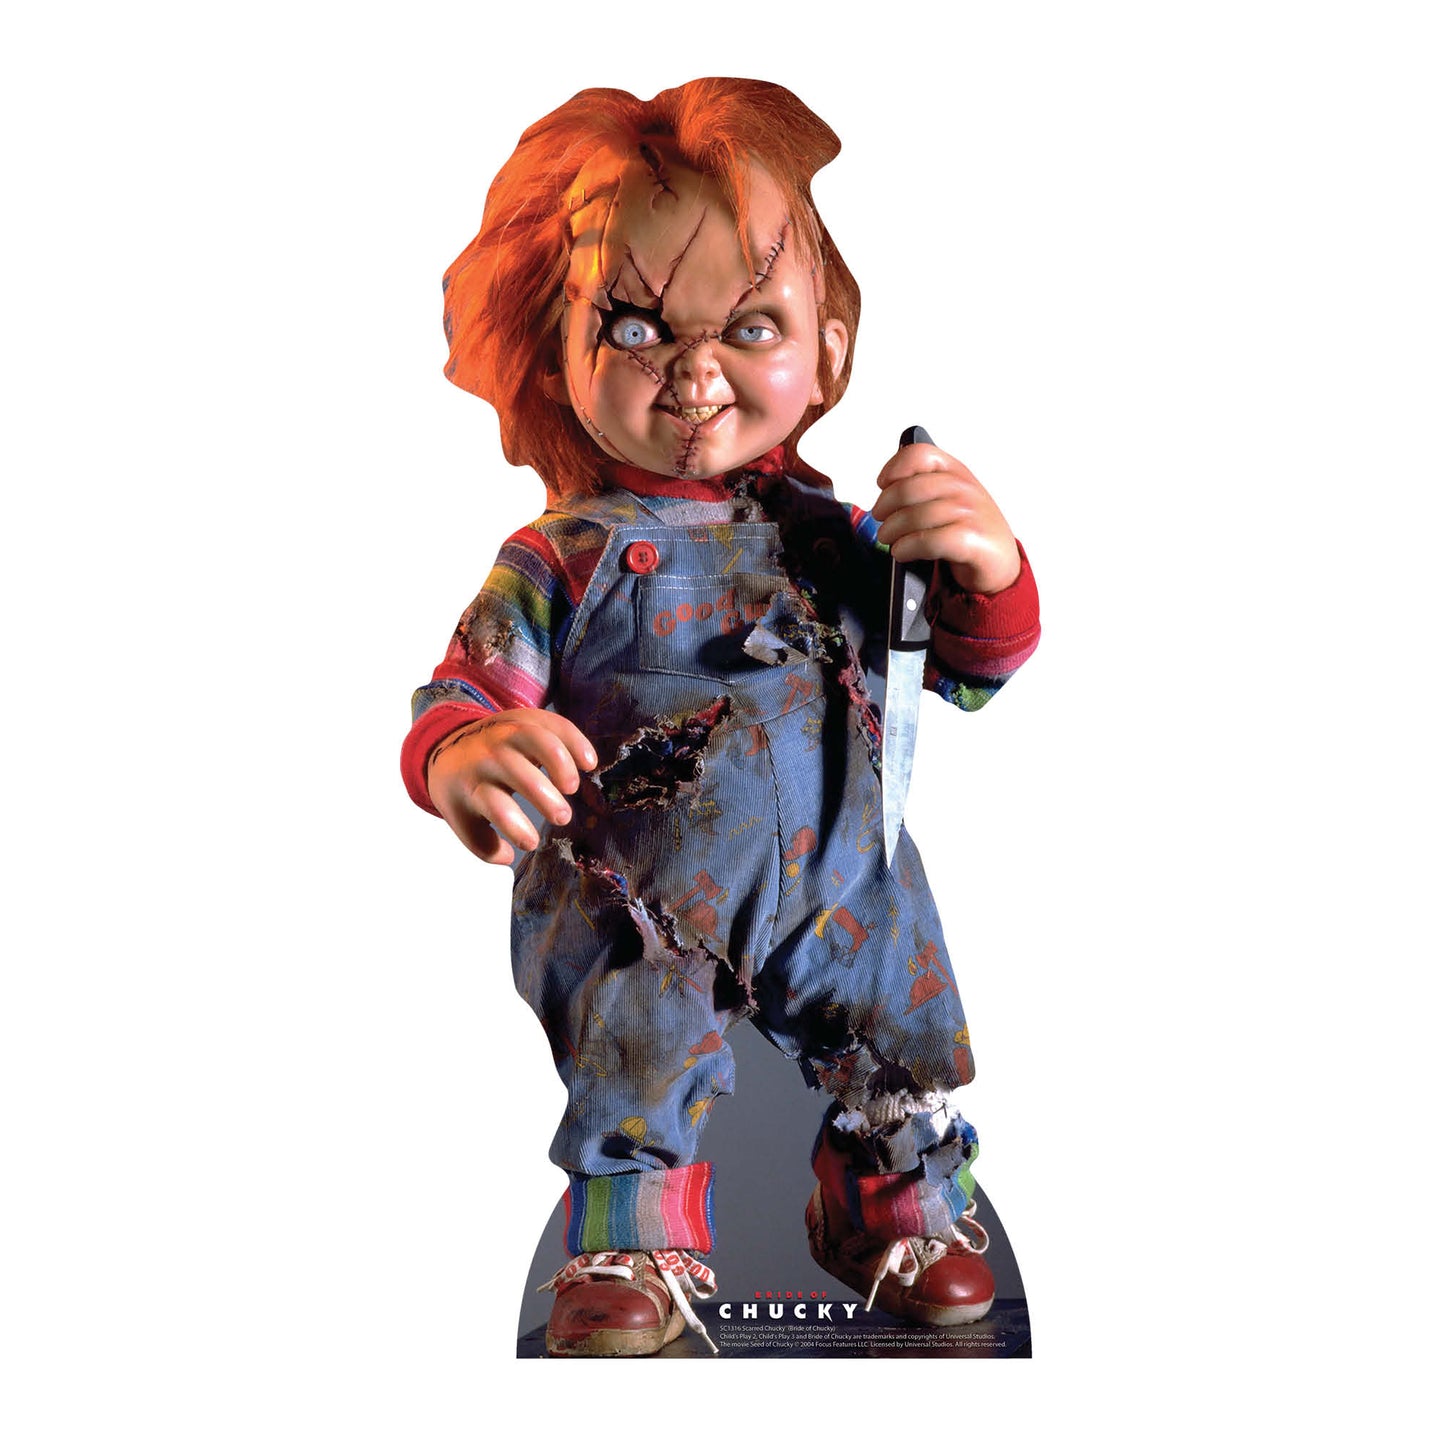 Scarred Chucky Doll Cardboard Cutout Lifesize